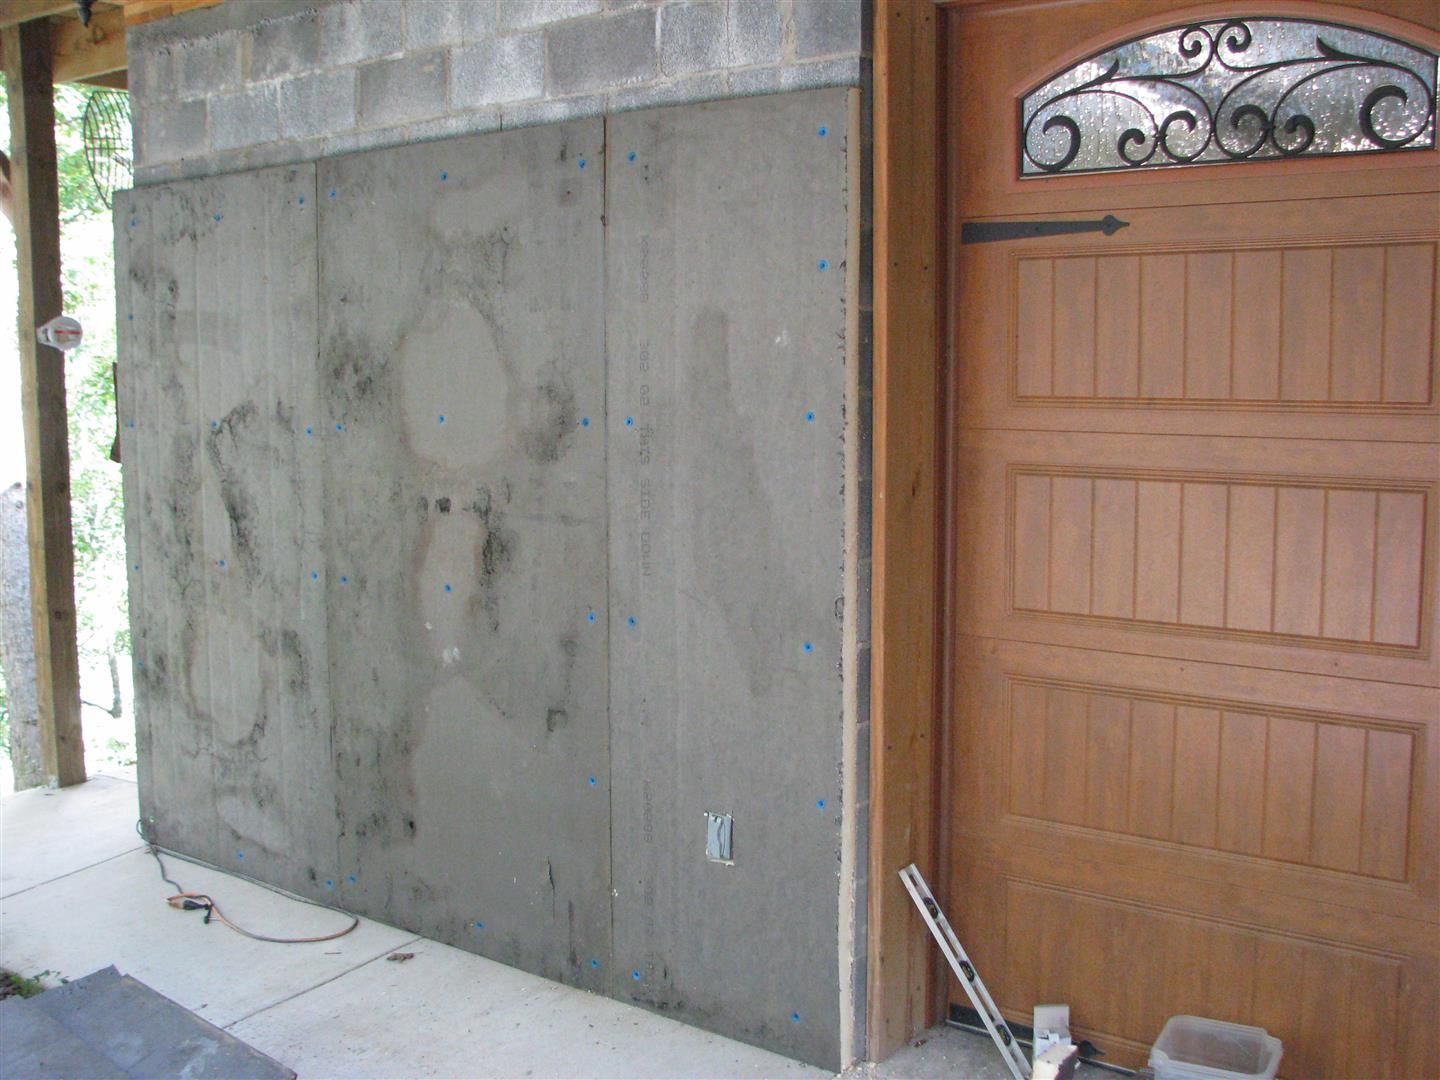 Hearthstone H1 - Uninsulated basement vs insulated basement = WOW!!